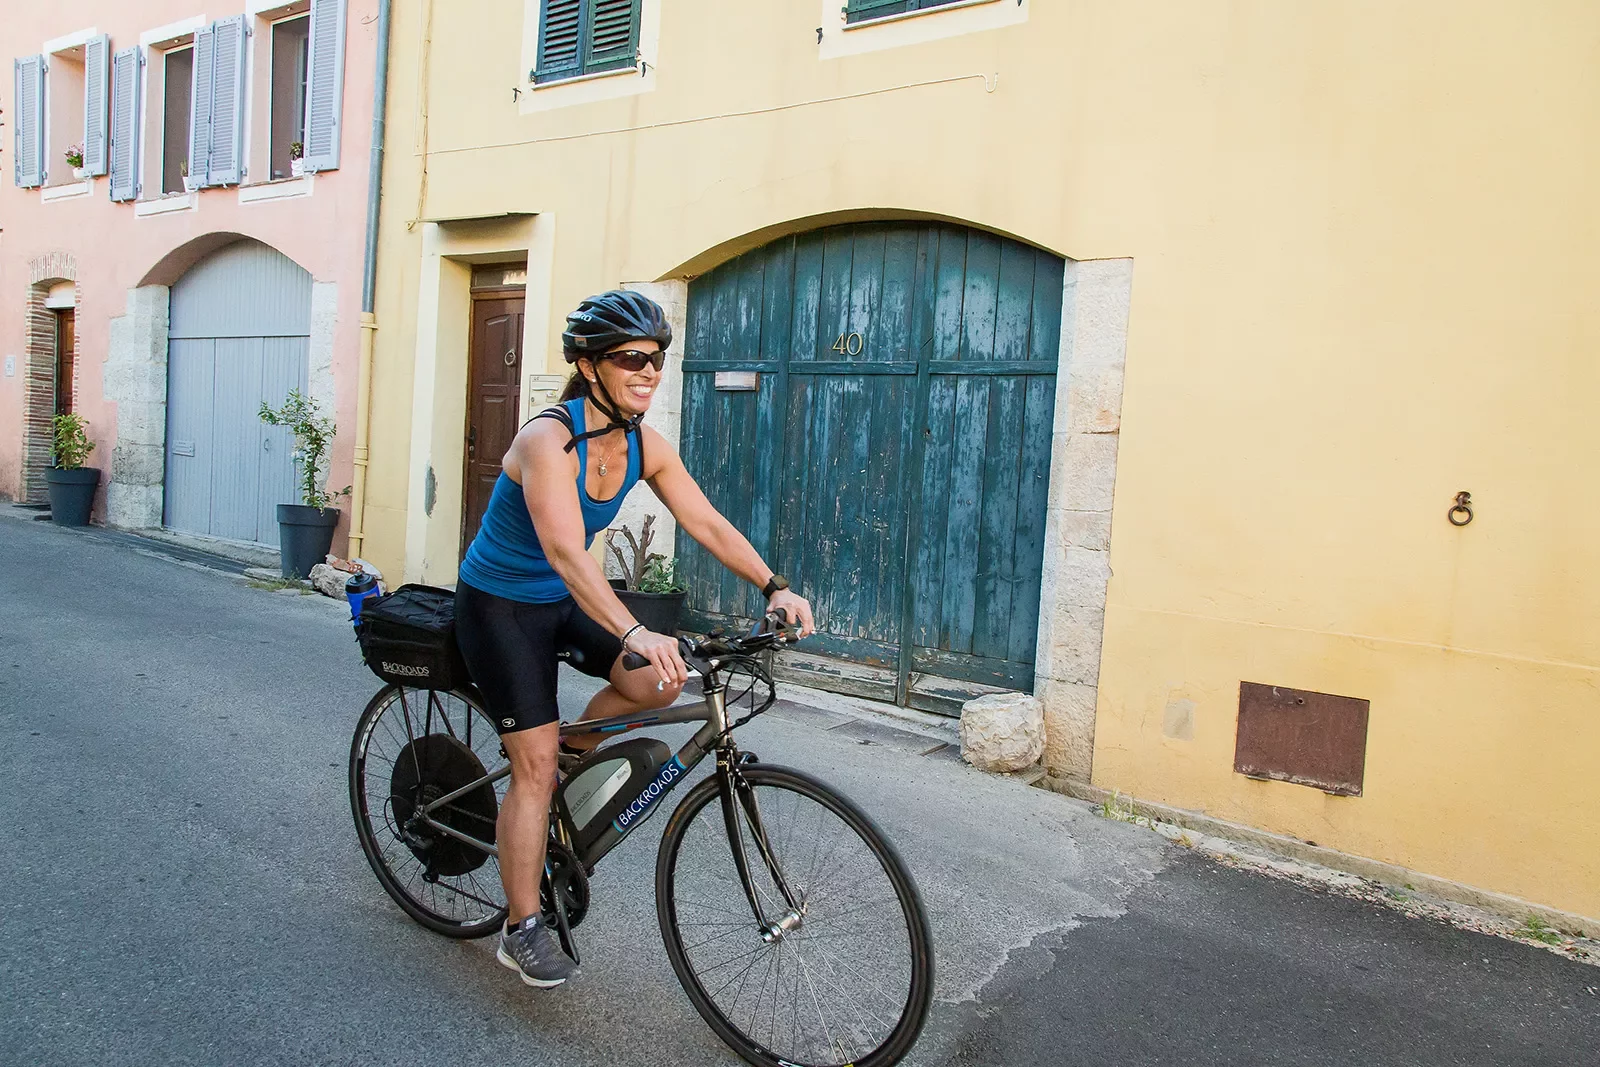 Biker riding down European alleyway.